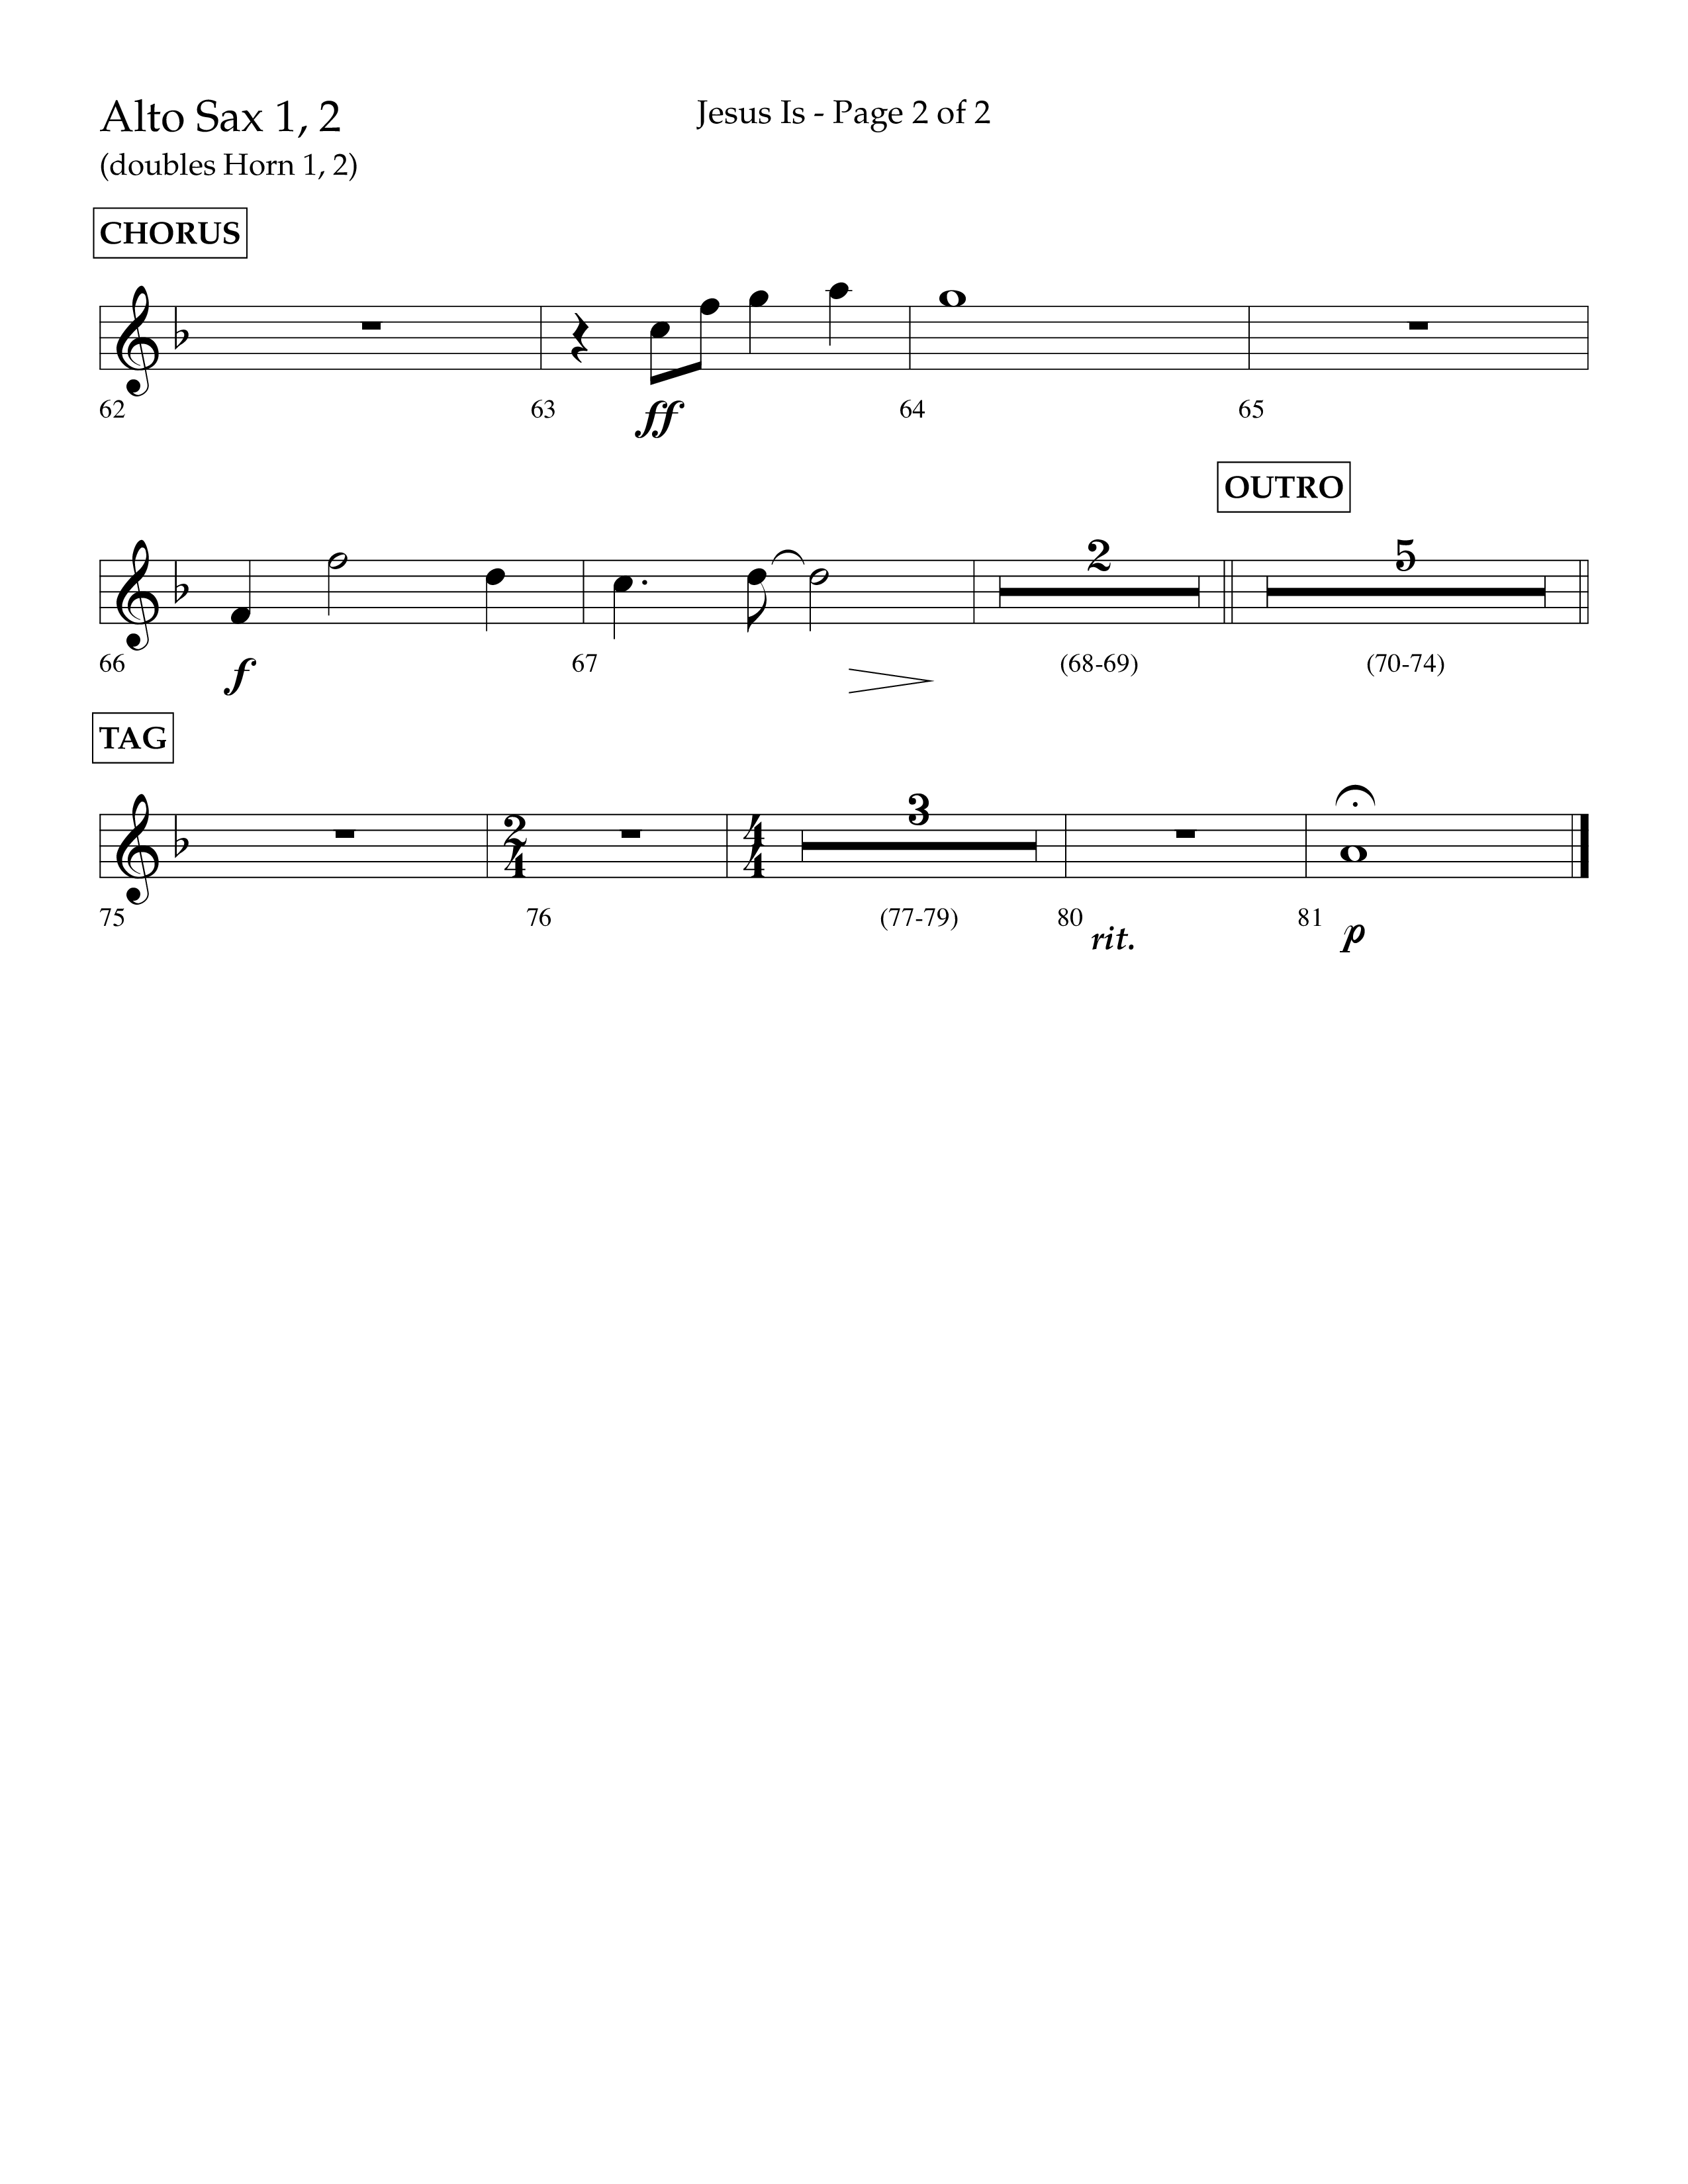 Jesus Is (Choral Anthem SATB) Alto Sax 1/2 (Lifeway Choral / Arr. John Bolin / Arr. Don Koch / Orch. Cliff Duren)